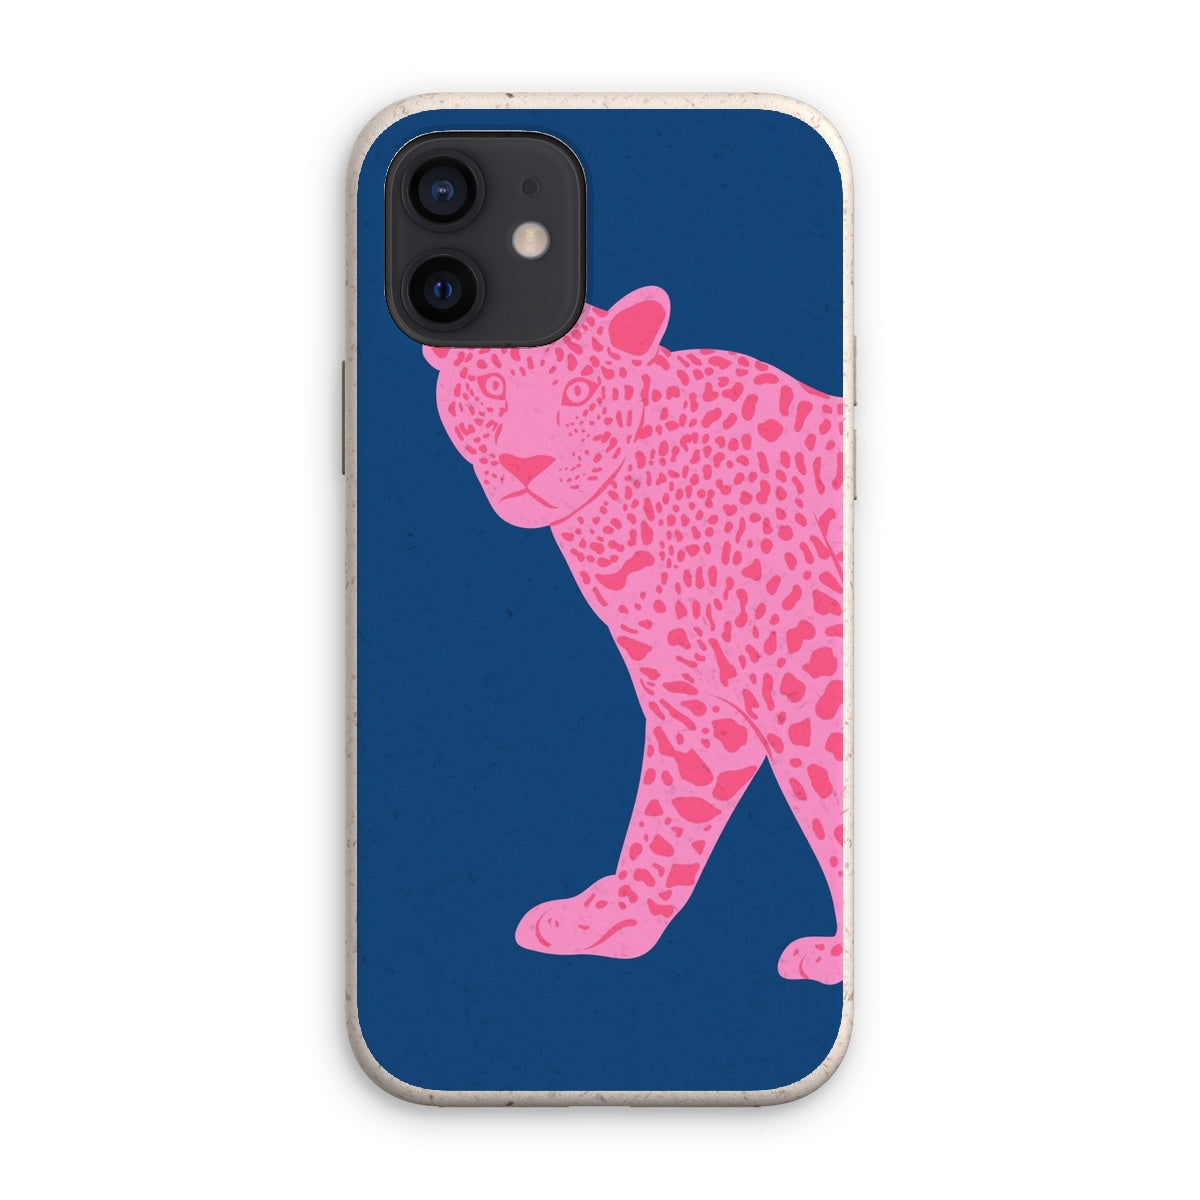 Biodegradable anti-shock phone case - Pink panther